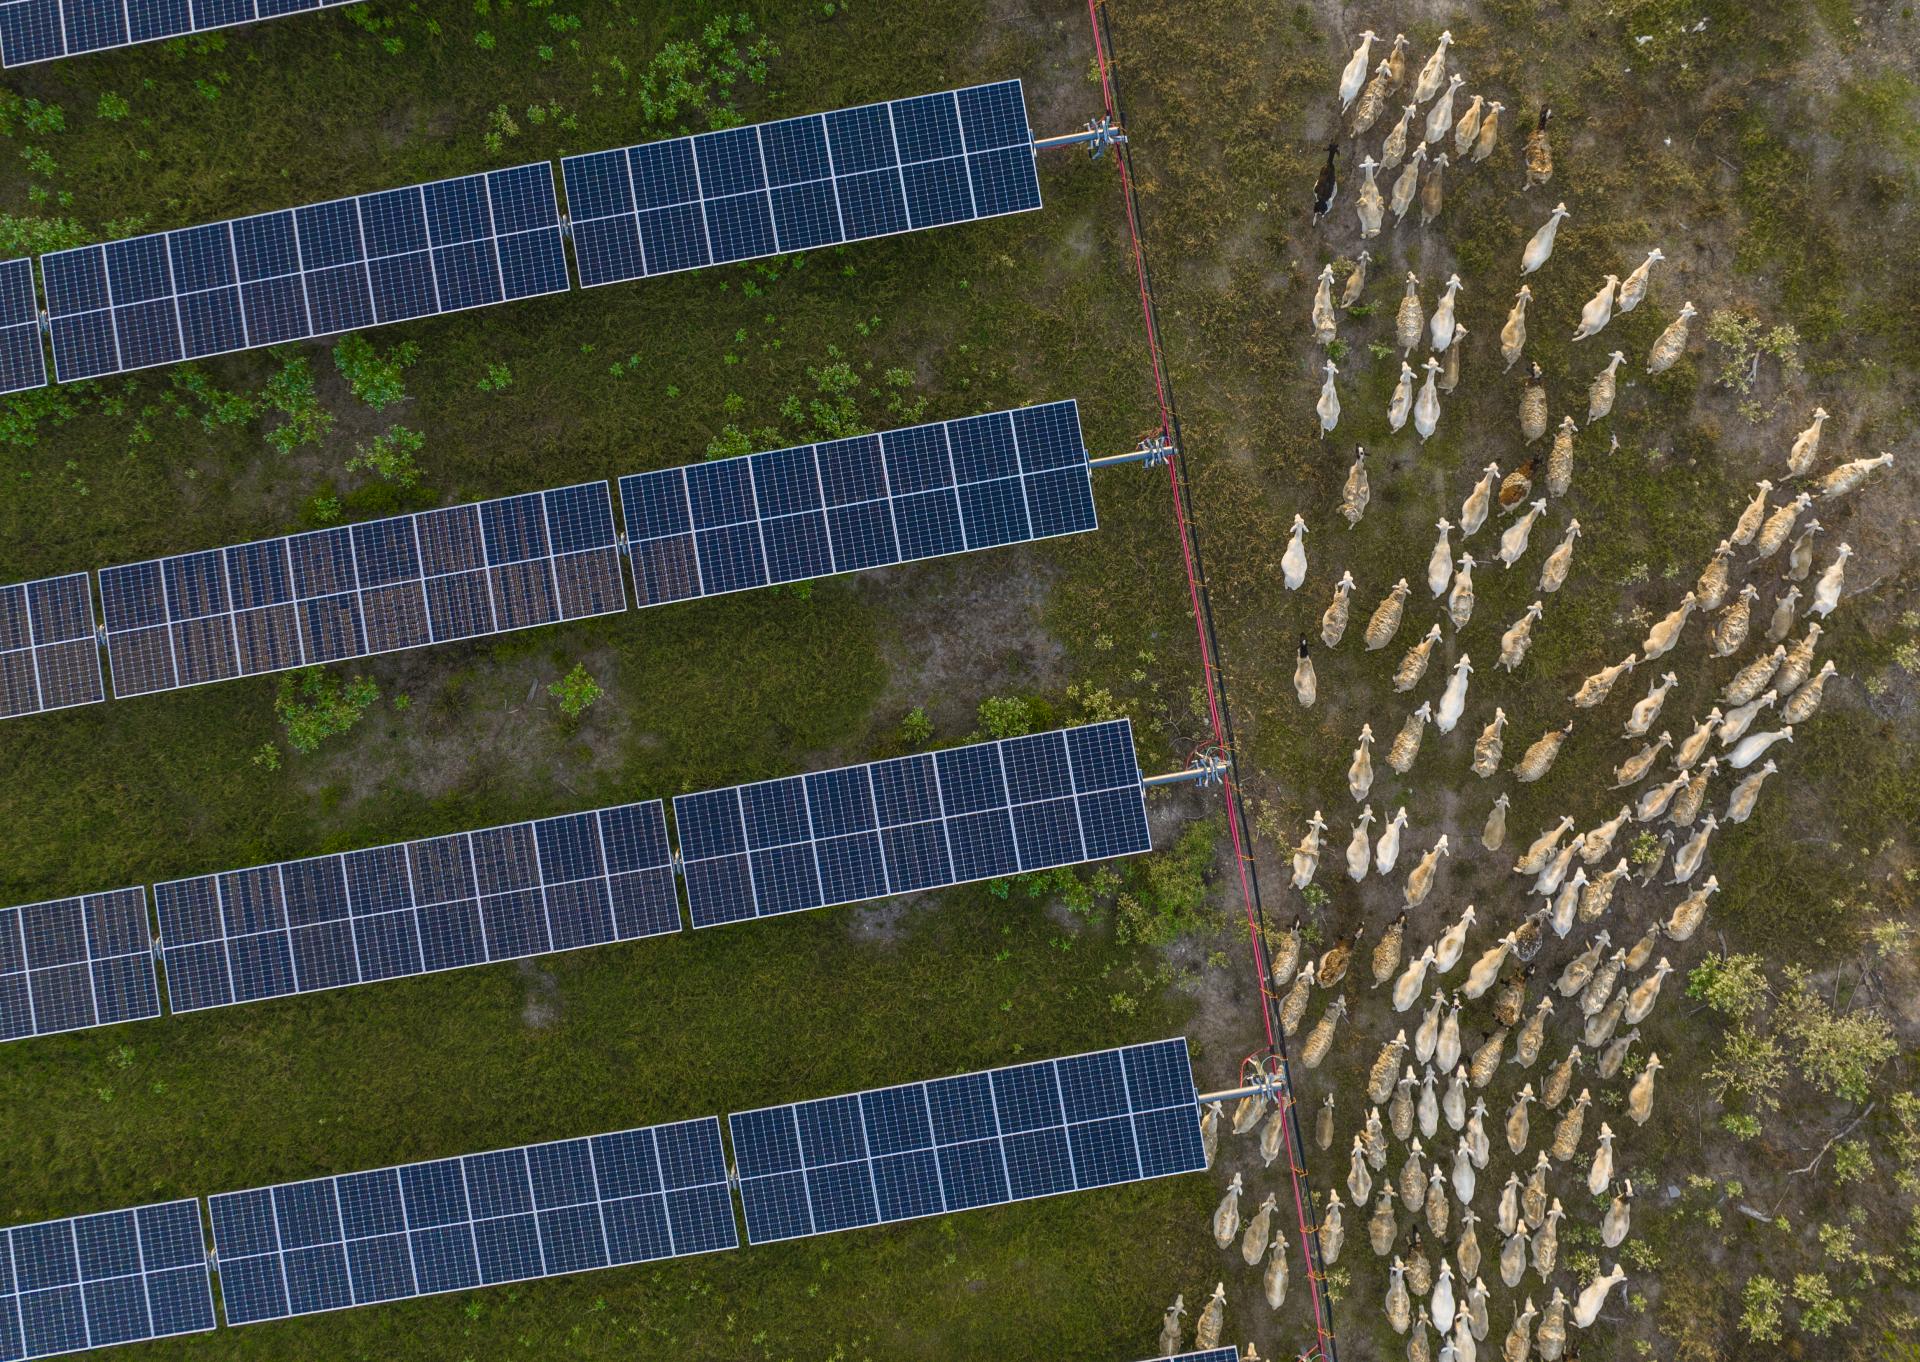 Sheep grazing next to a solar array.